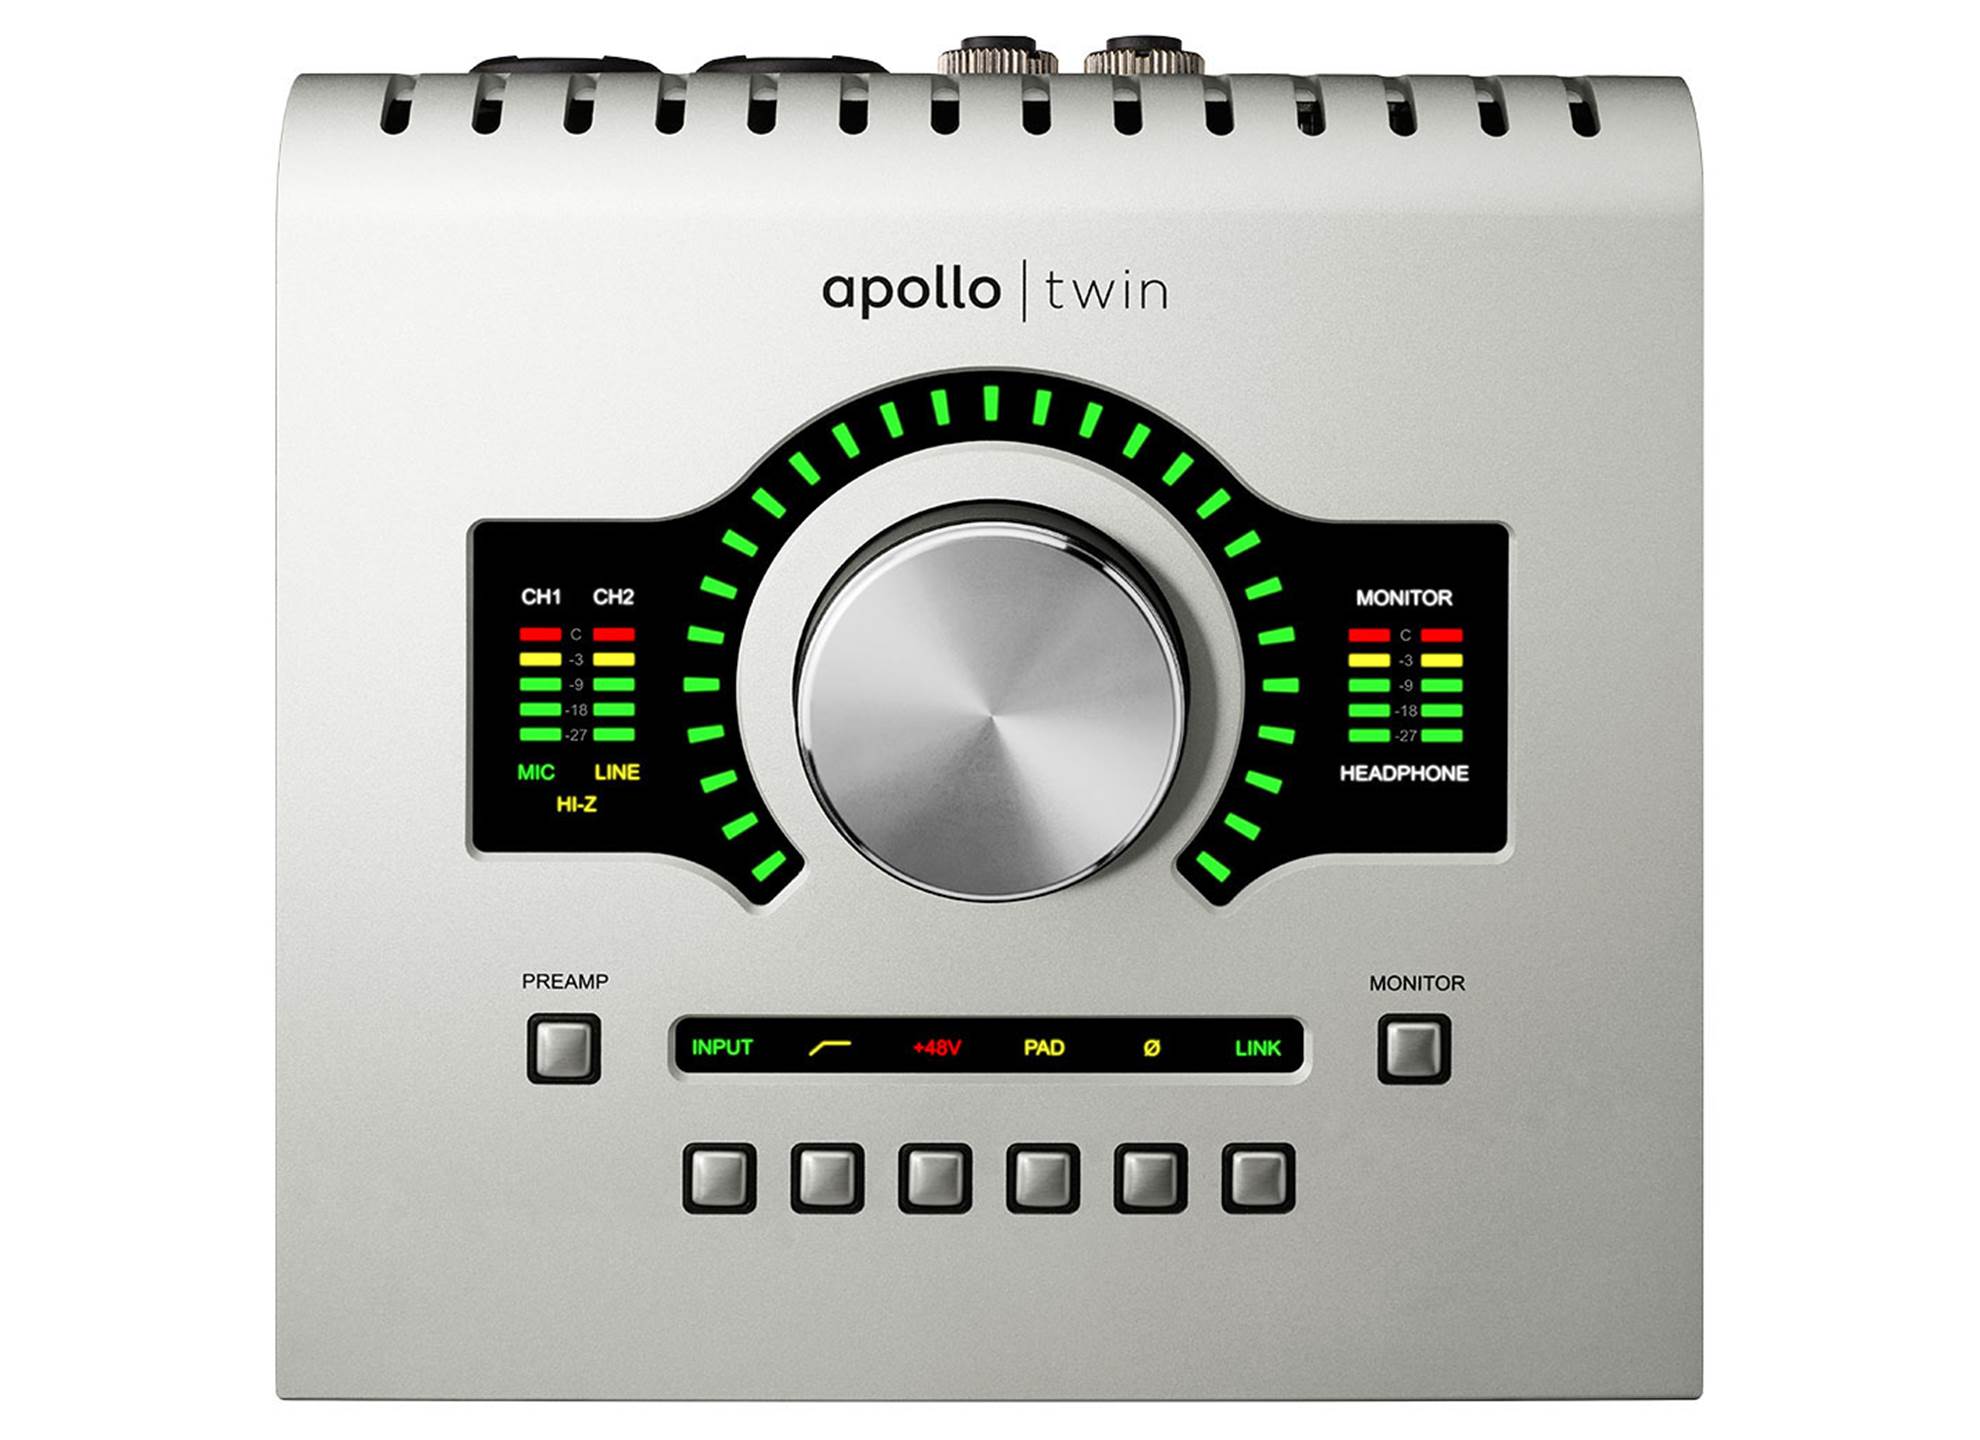 Apollo Twin X USB Duo HE Usb audio interface Universal audio